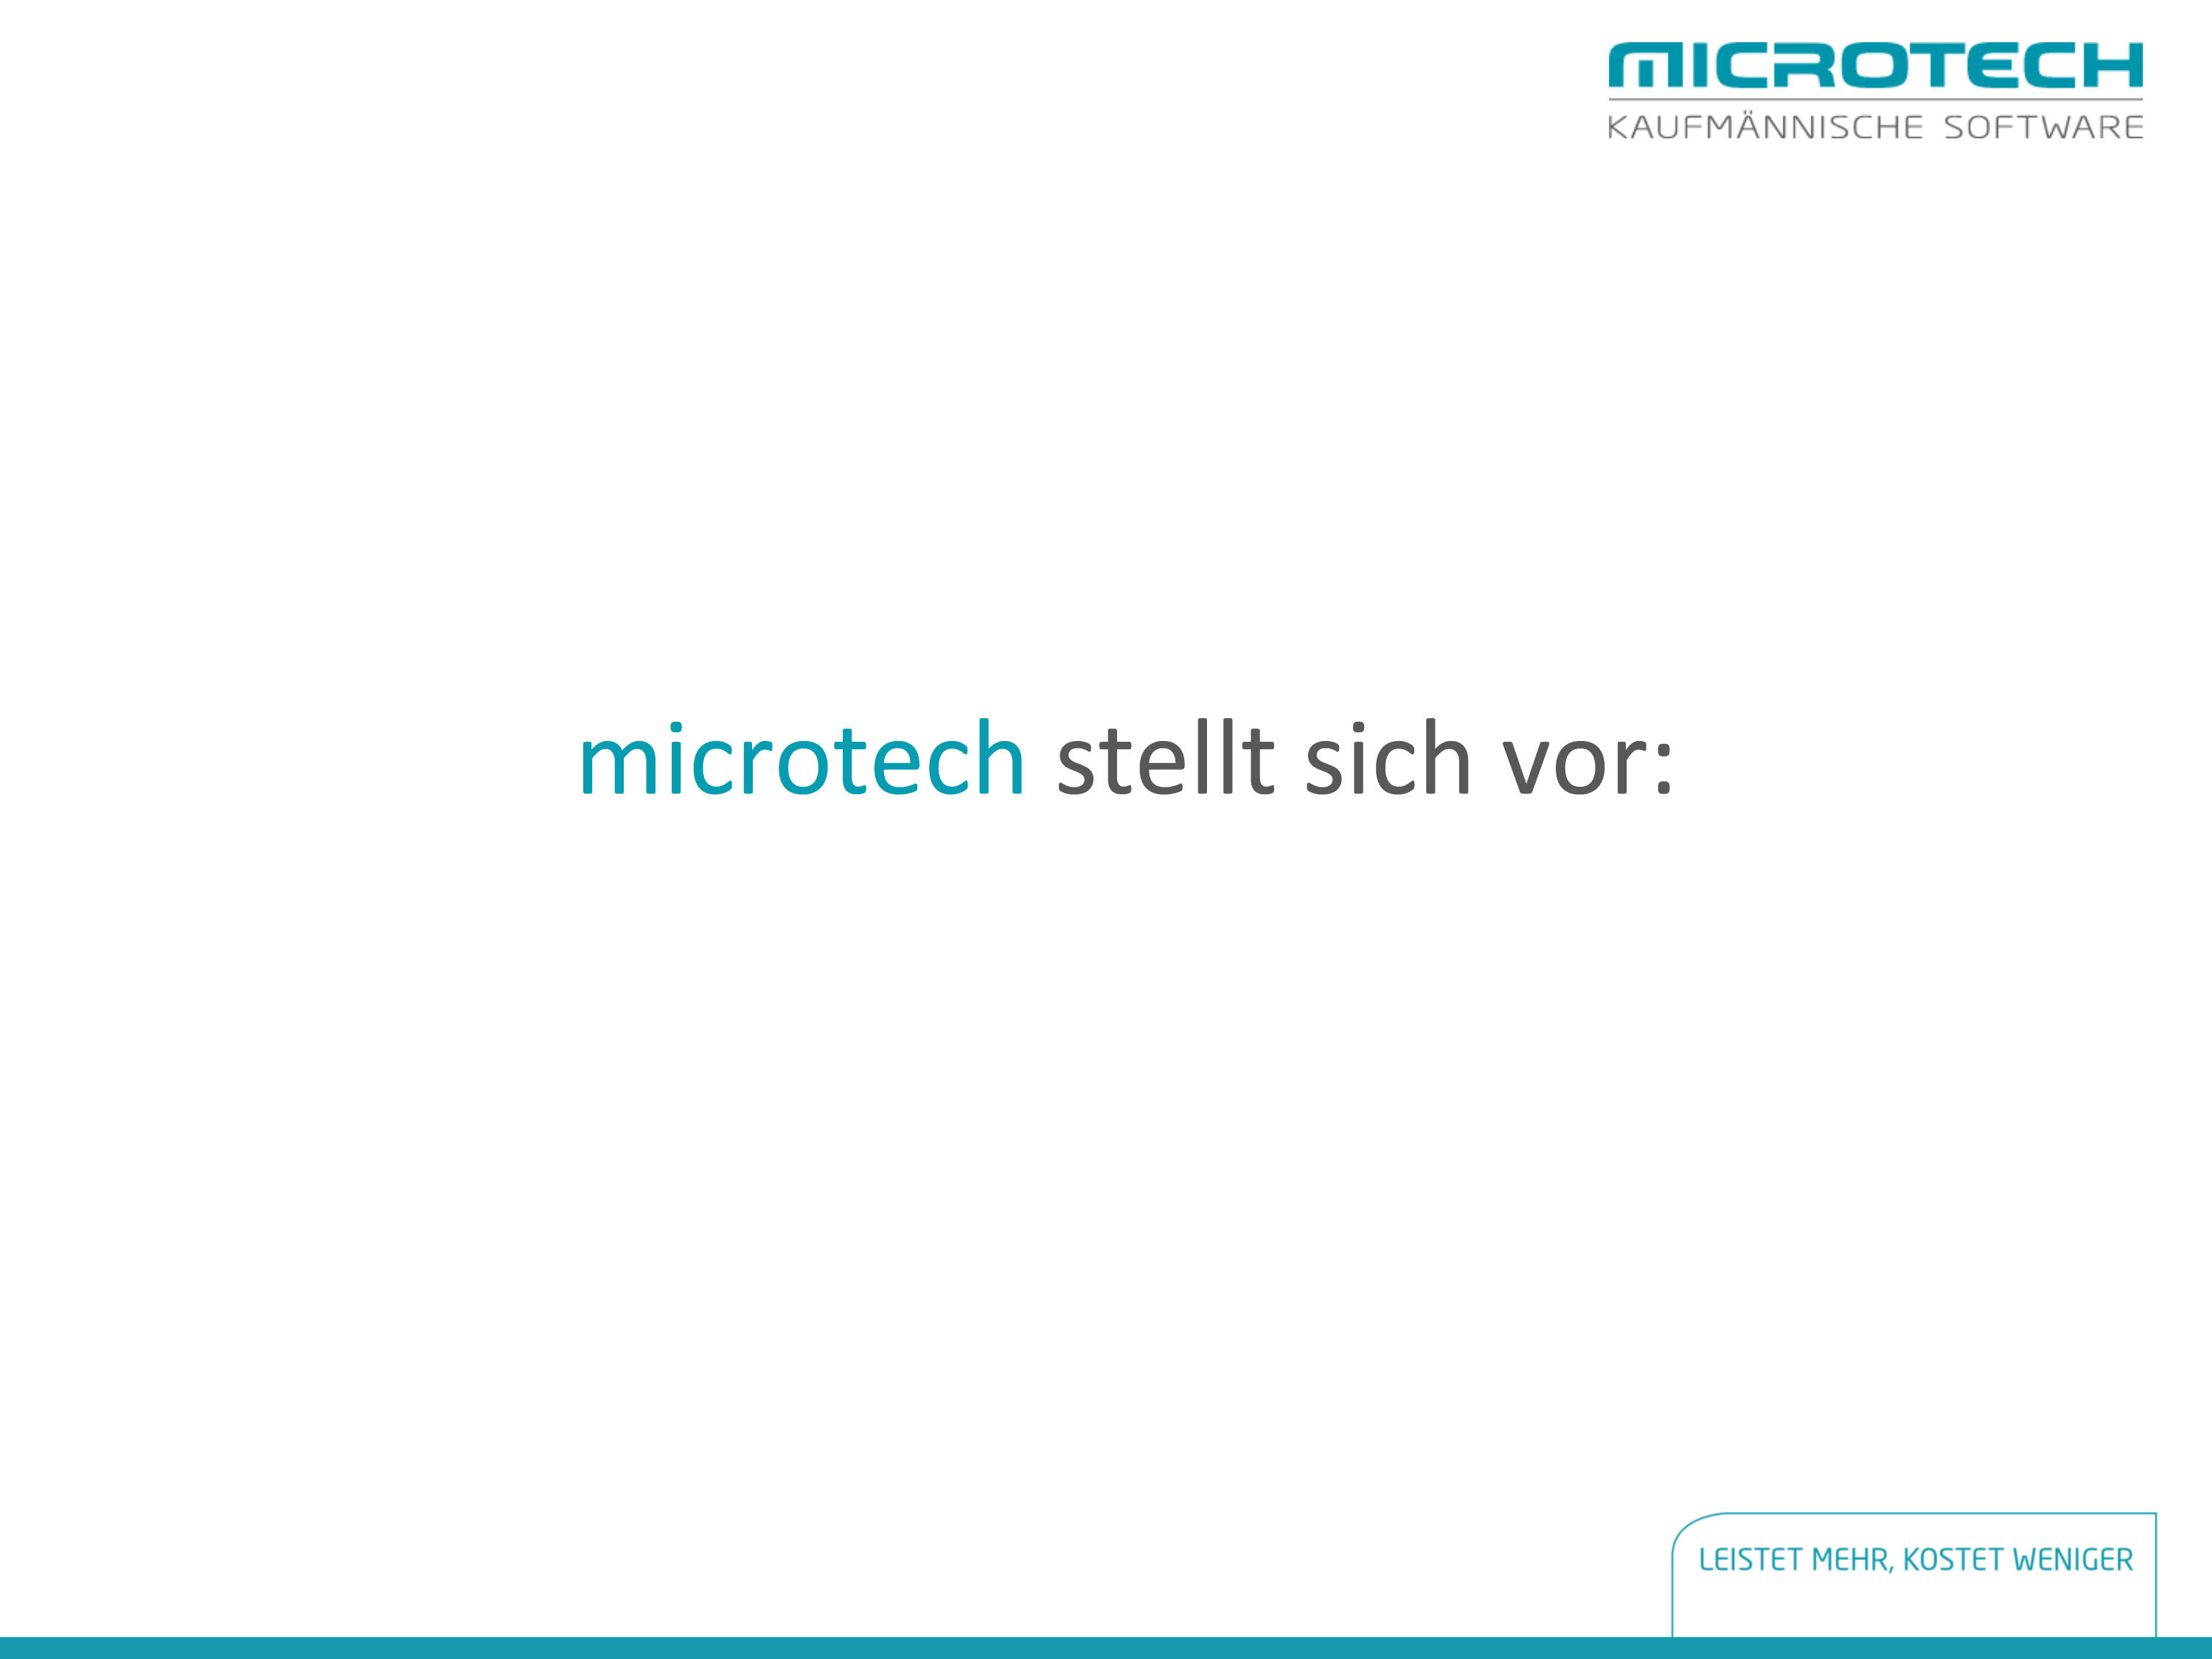 Microtech-1.jpg